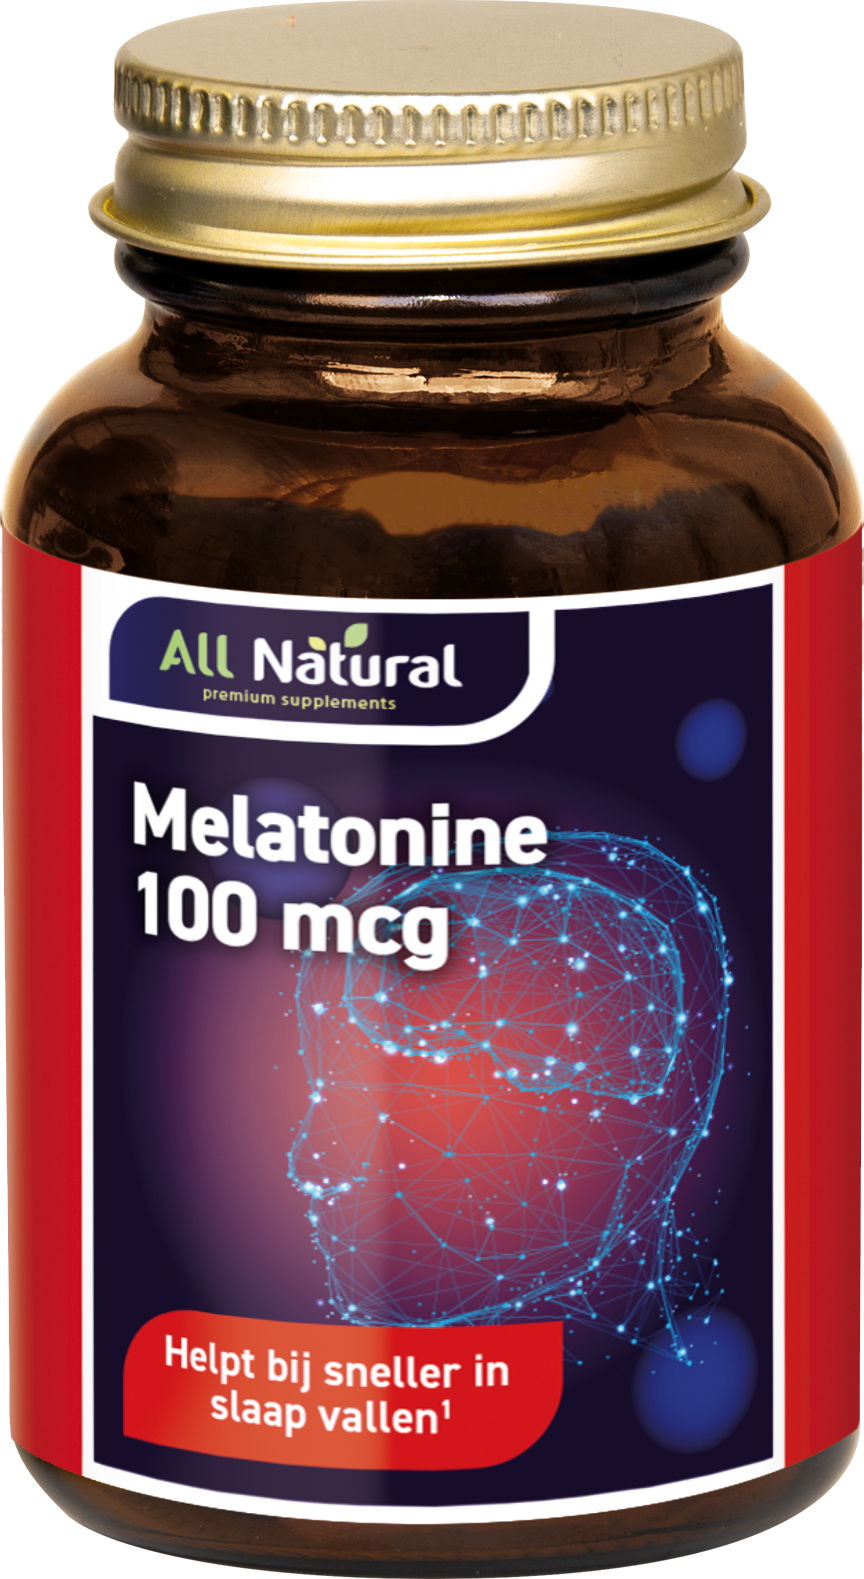 All natural melatonine 100 mcg tabletten bevat 100 mcg pure melatonine per gemakkelijk slikbaar tabletje....